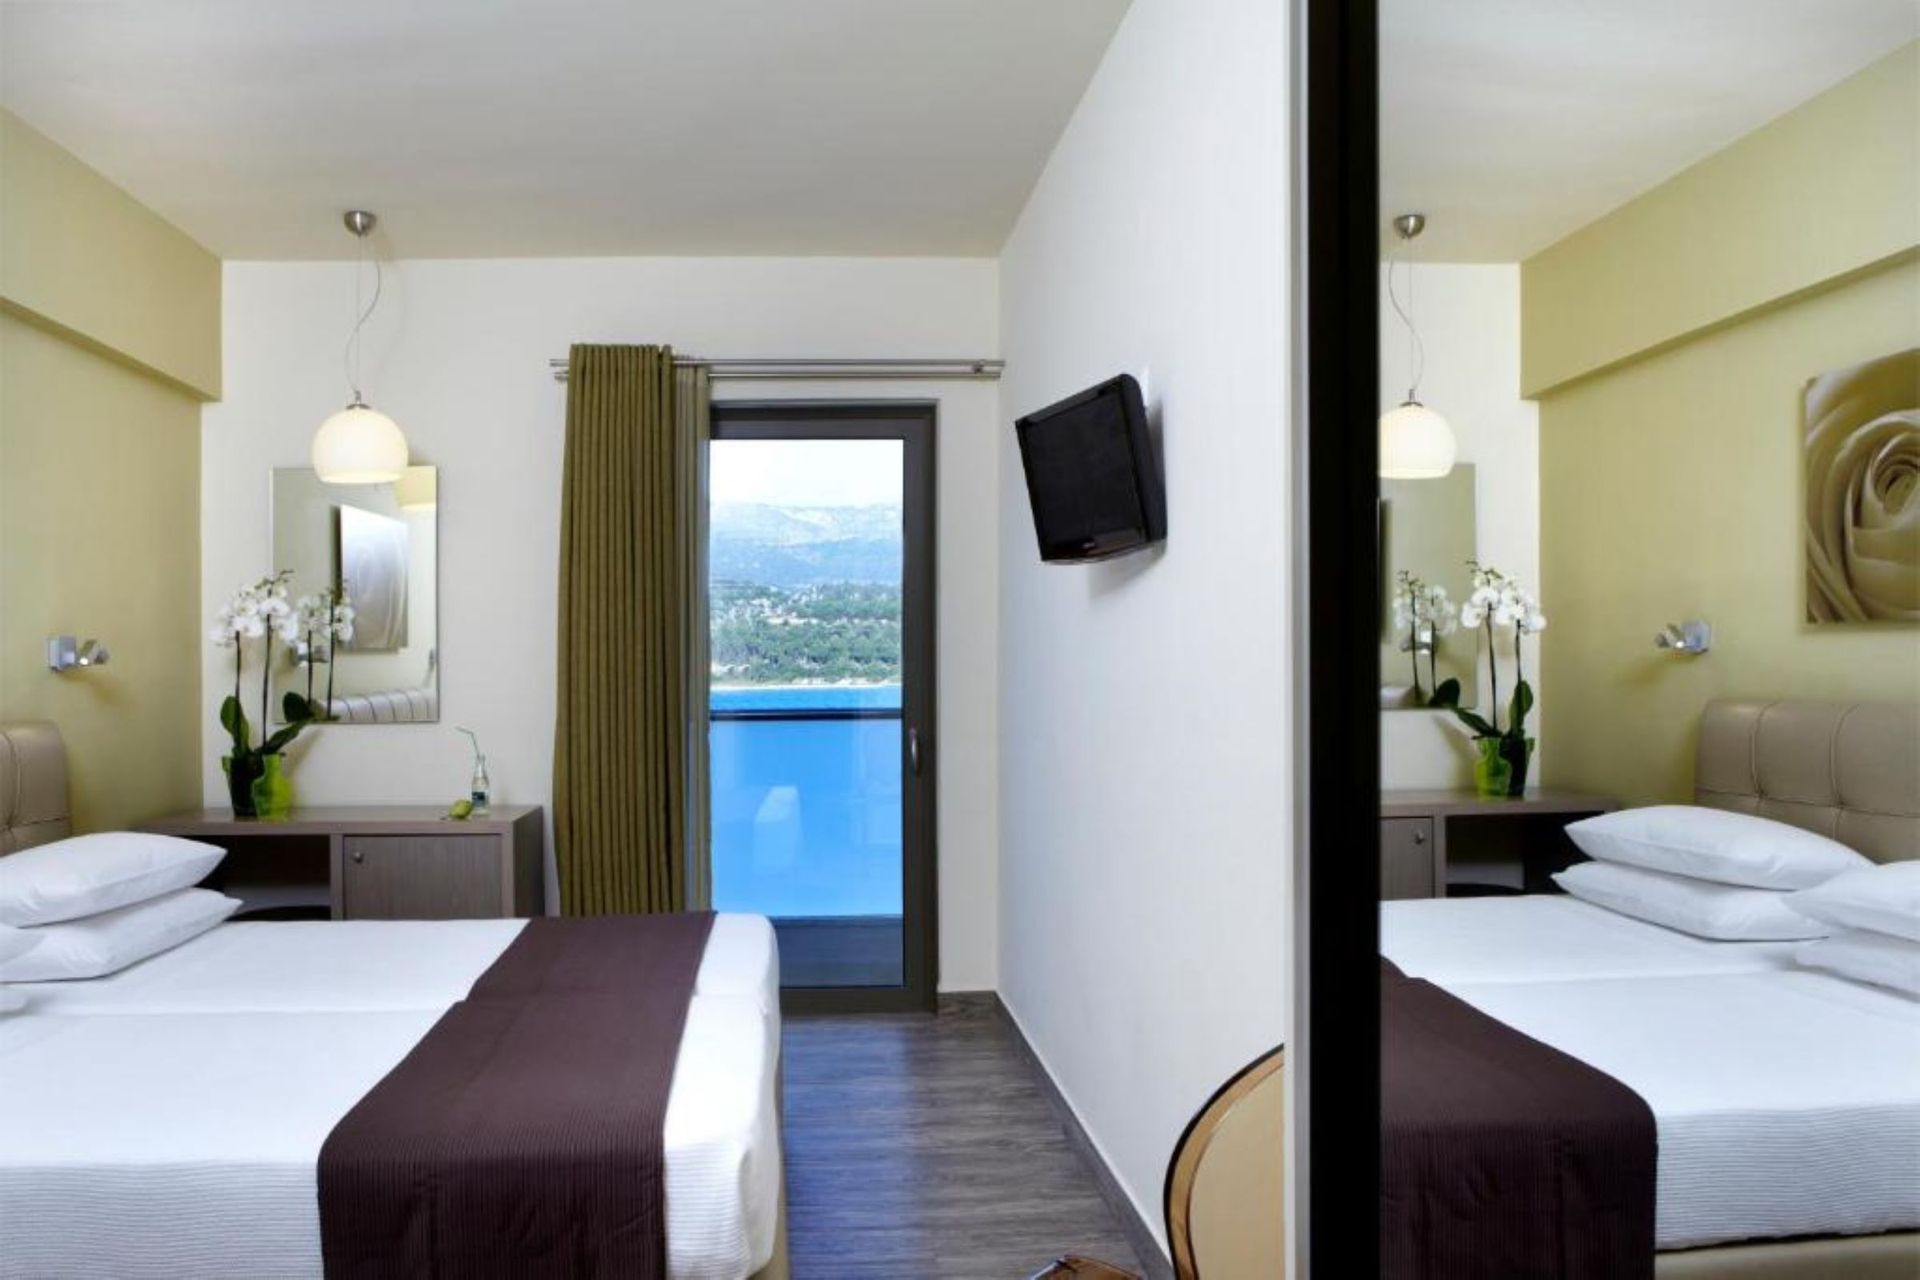 Mouikis Hotel - Κεφαλονιά ✦ 2 Ημέρες (1 Διανυκτέρευση) ✦ 2 άτομα ✦ Πρωινό ✦ έως 30/09/2022 ✦ Υπέροχη Τοποθεσία!